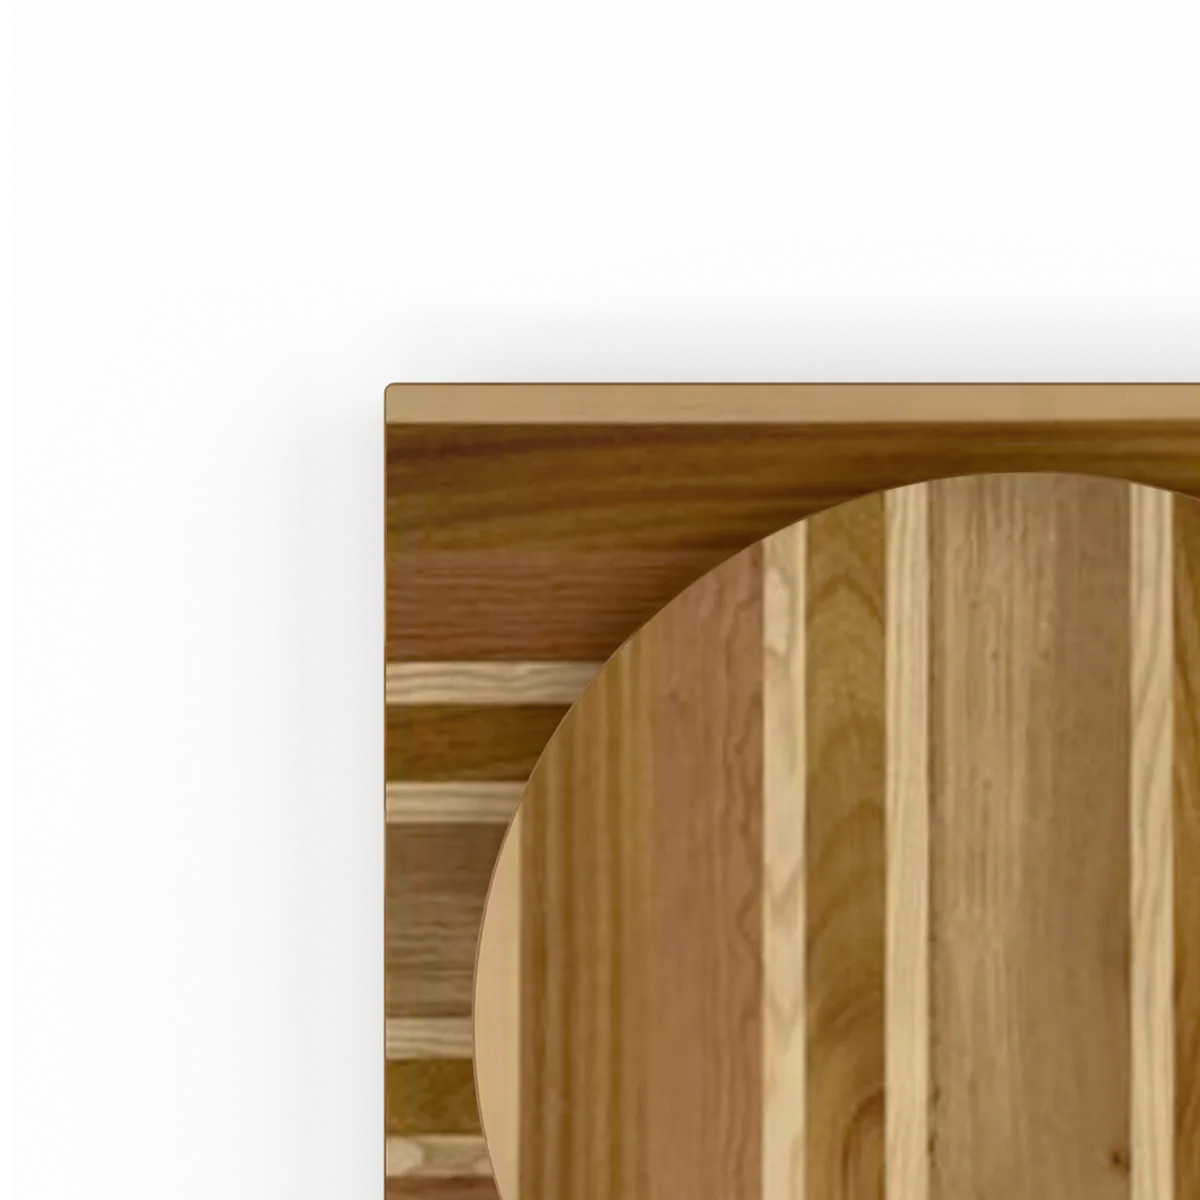 Mixed Wood Table Top Inside Iroko Cherry Ash Oak And Beech Strips